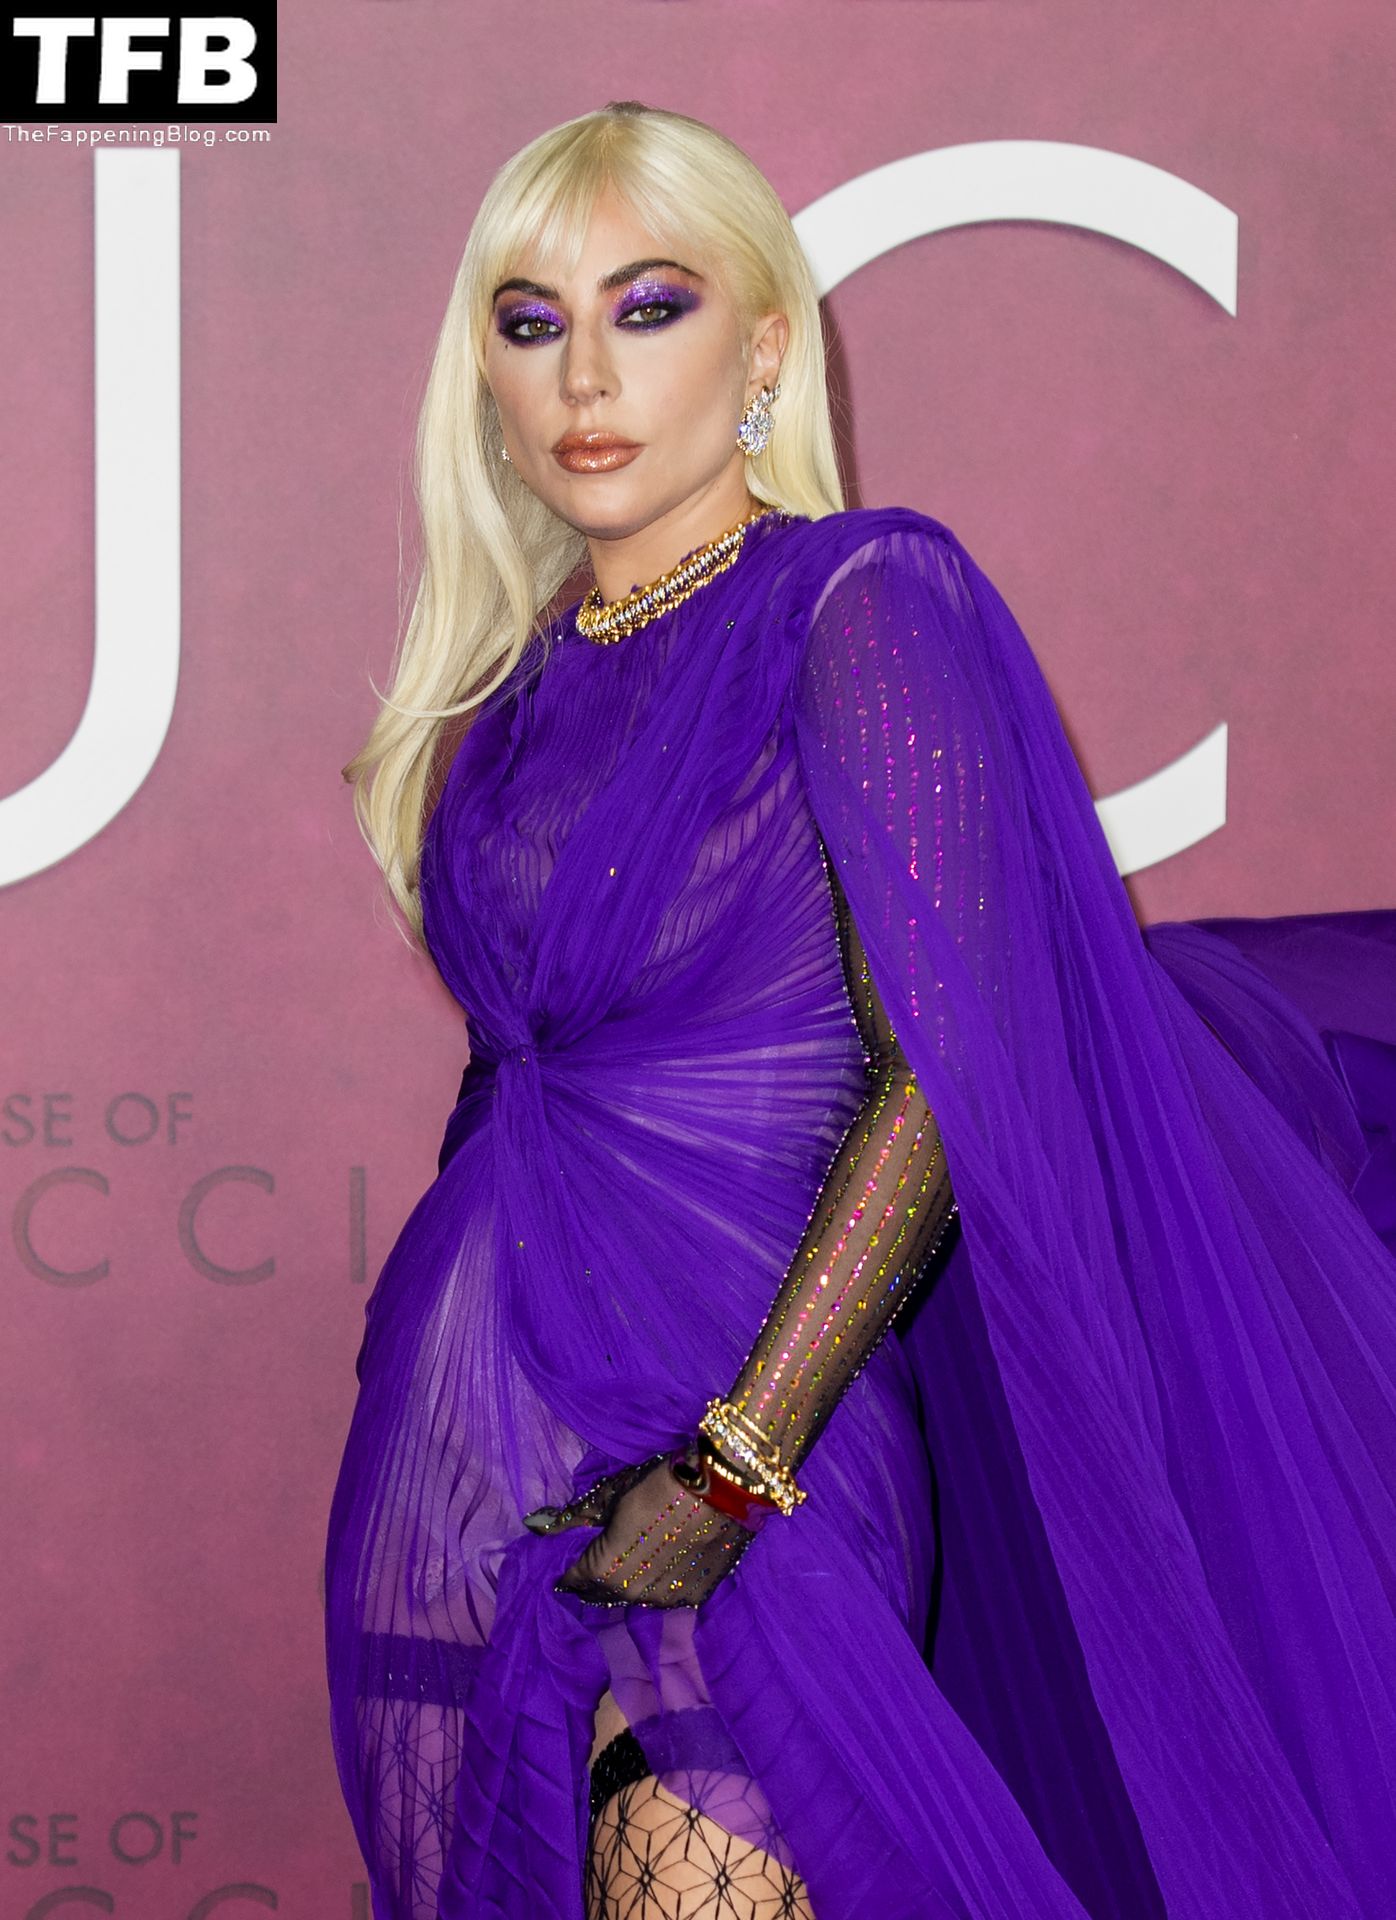 Lady-Gaga-Sexy-The-Fappening-Blog-138.jpg